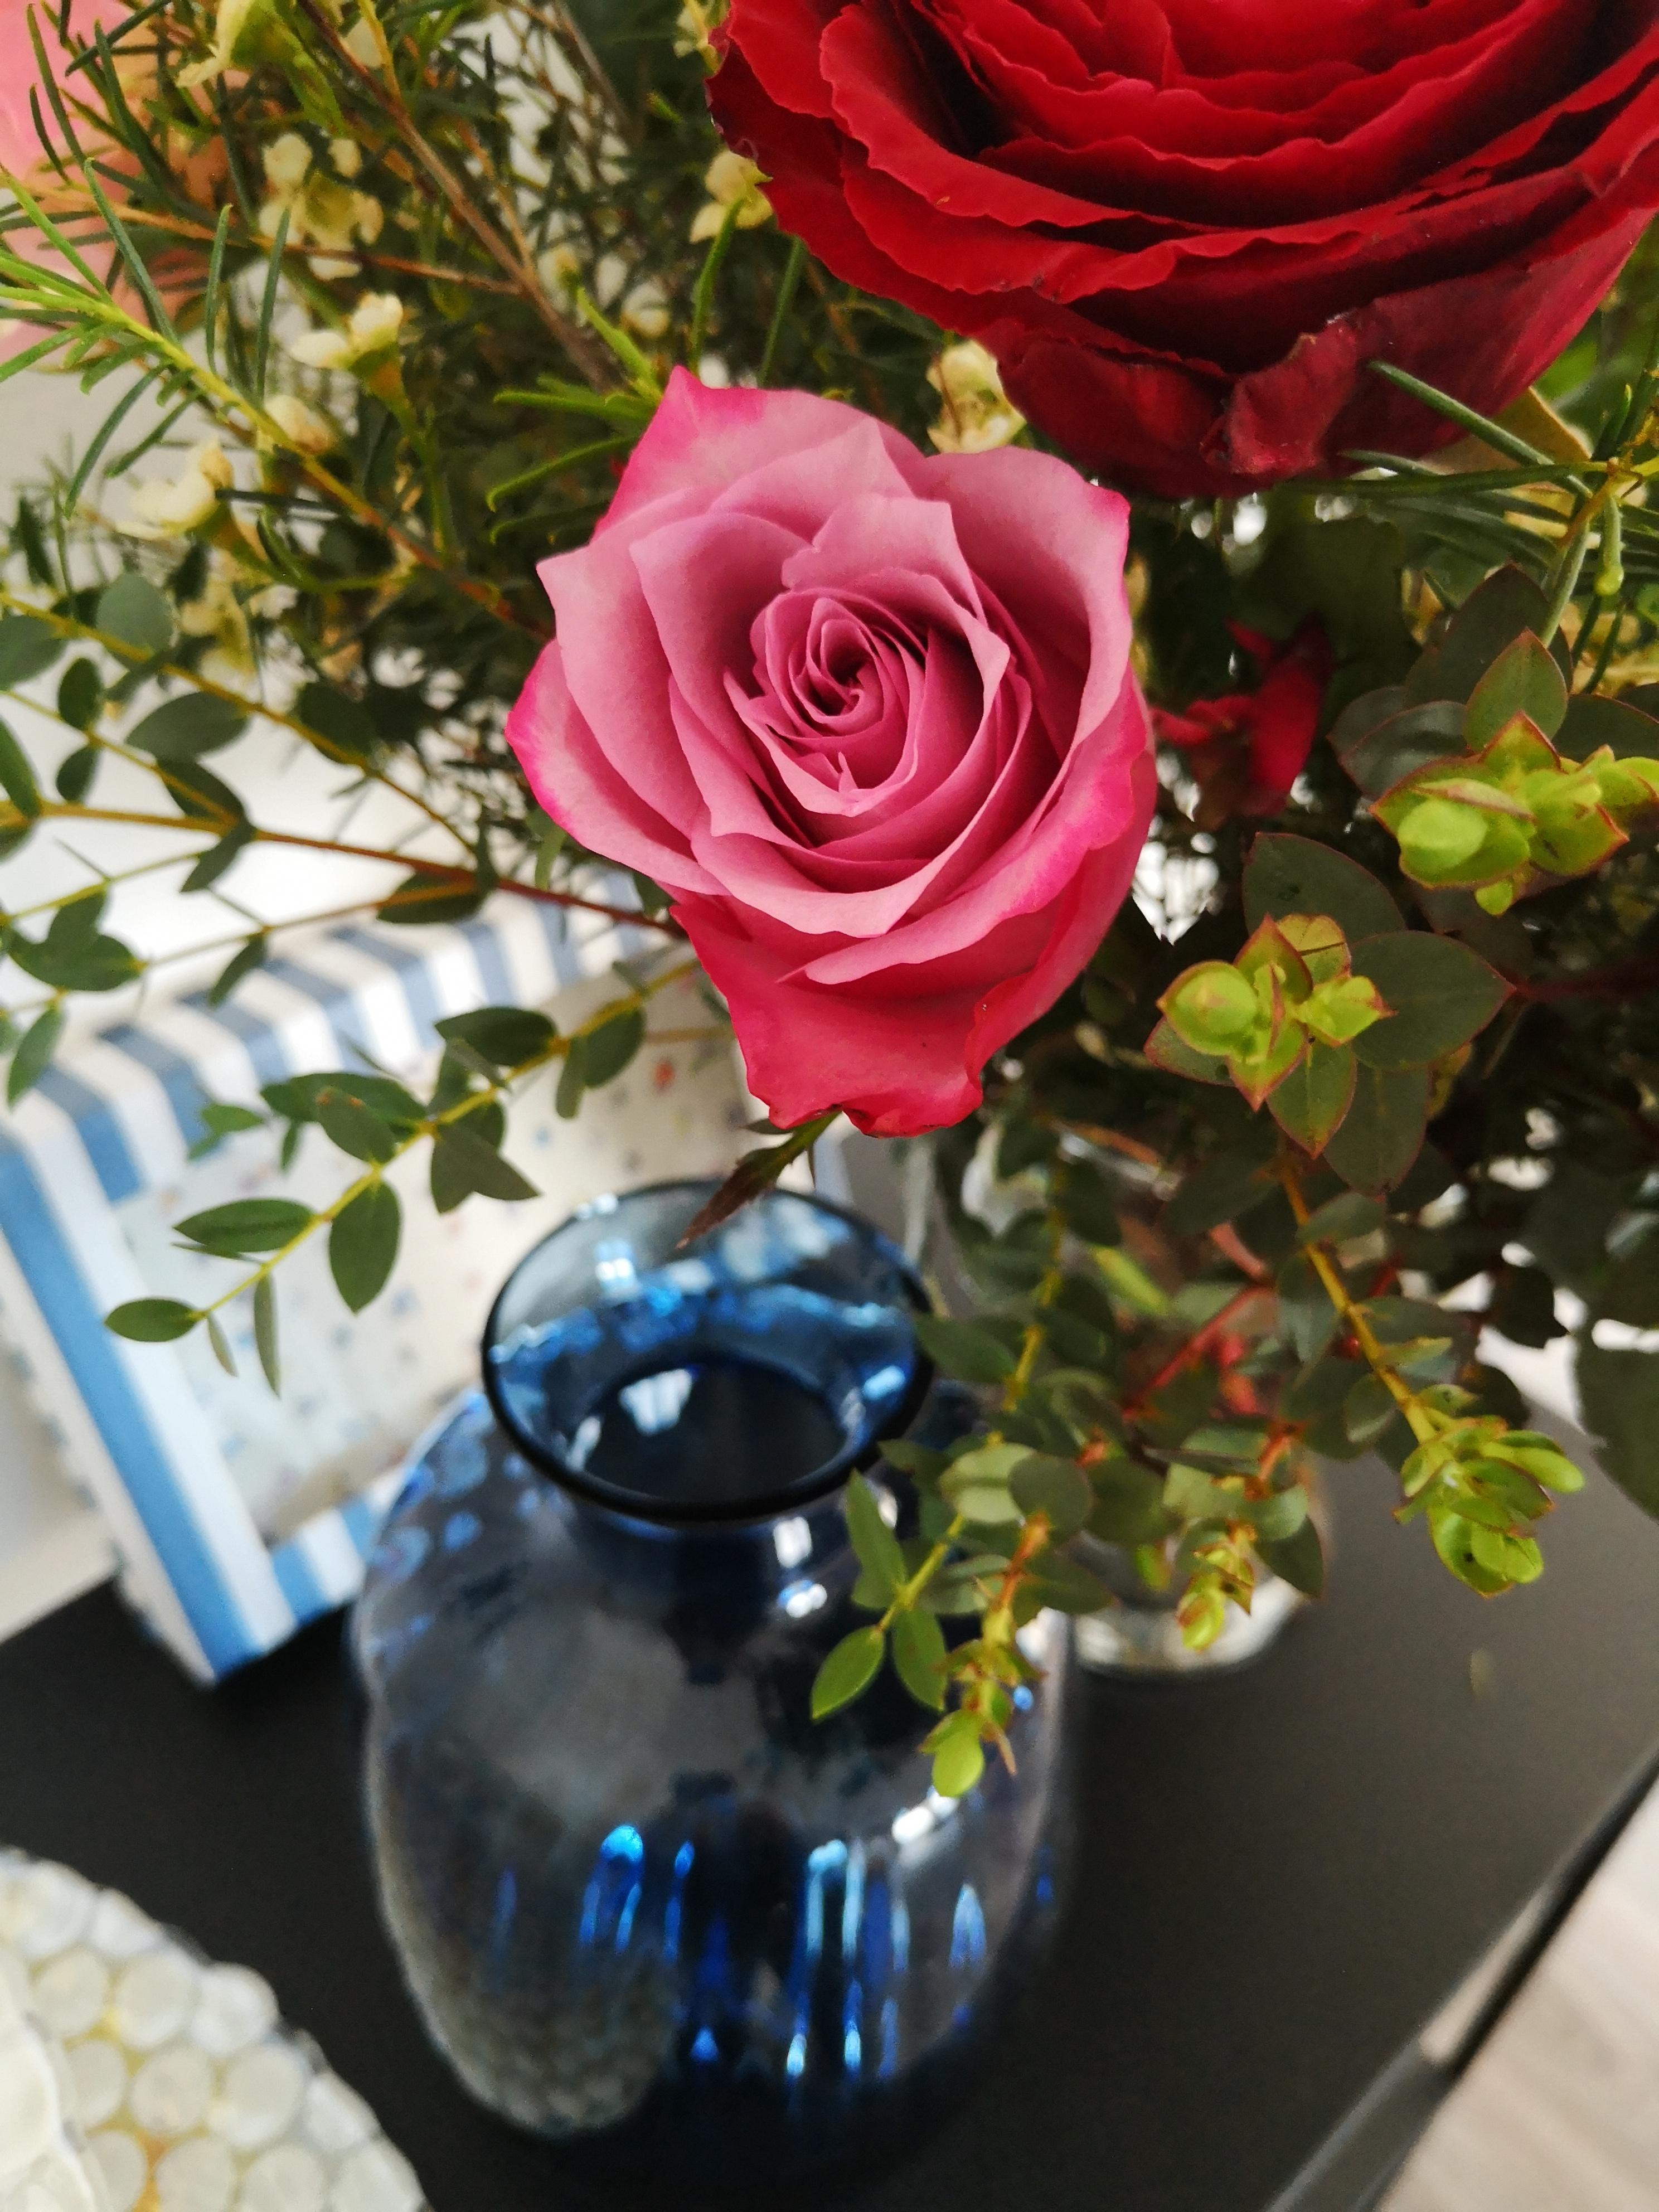 Flowers everywhere 🌹🌸🌺
#strauss #buket #vase #eukalyptus #wachsblumen #rosen #dekoration